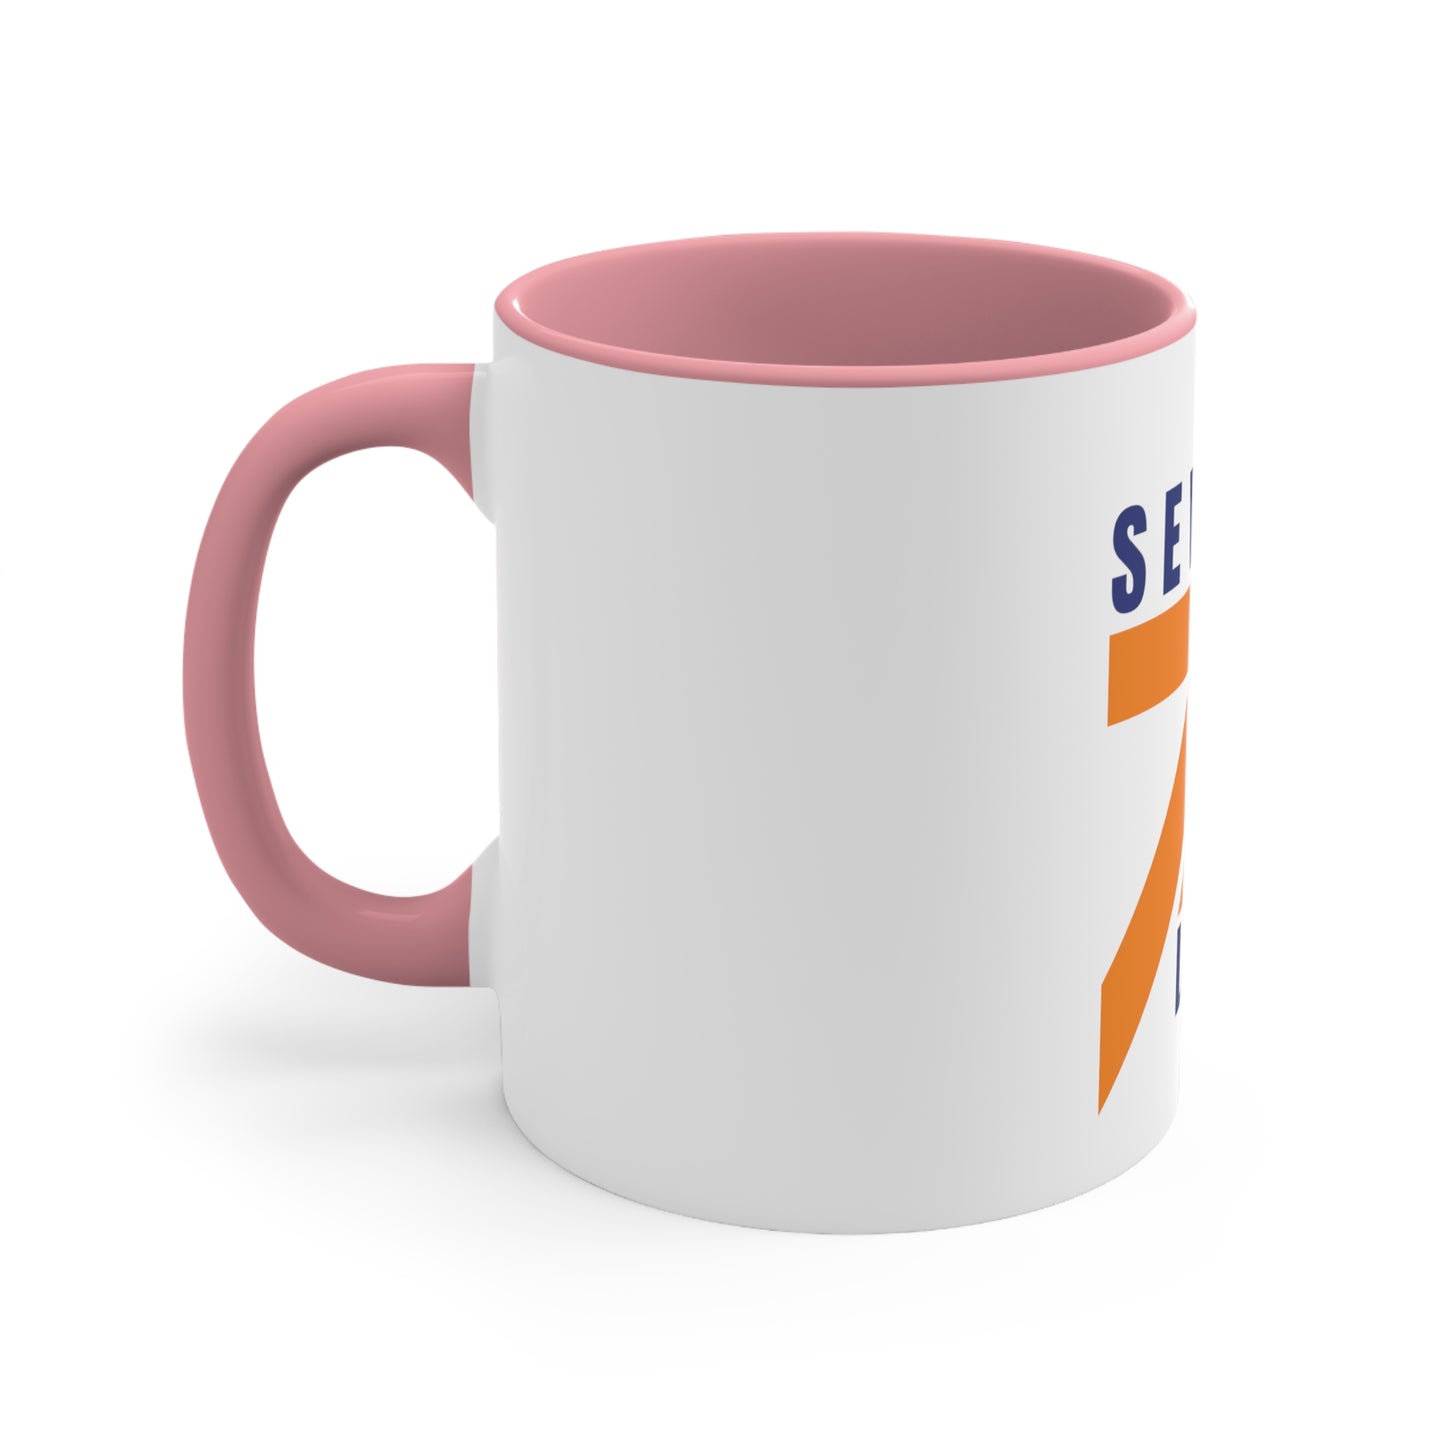 7L Band - Accent Coffee Mug, 11oz